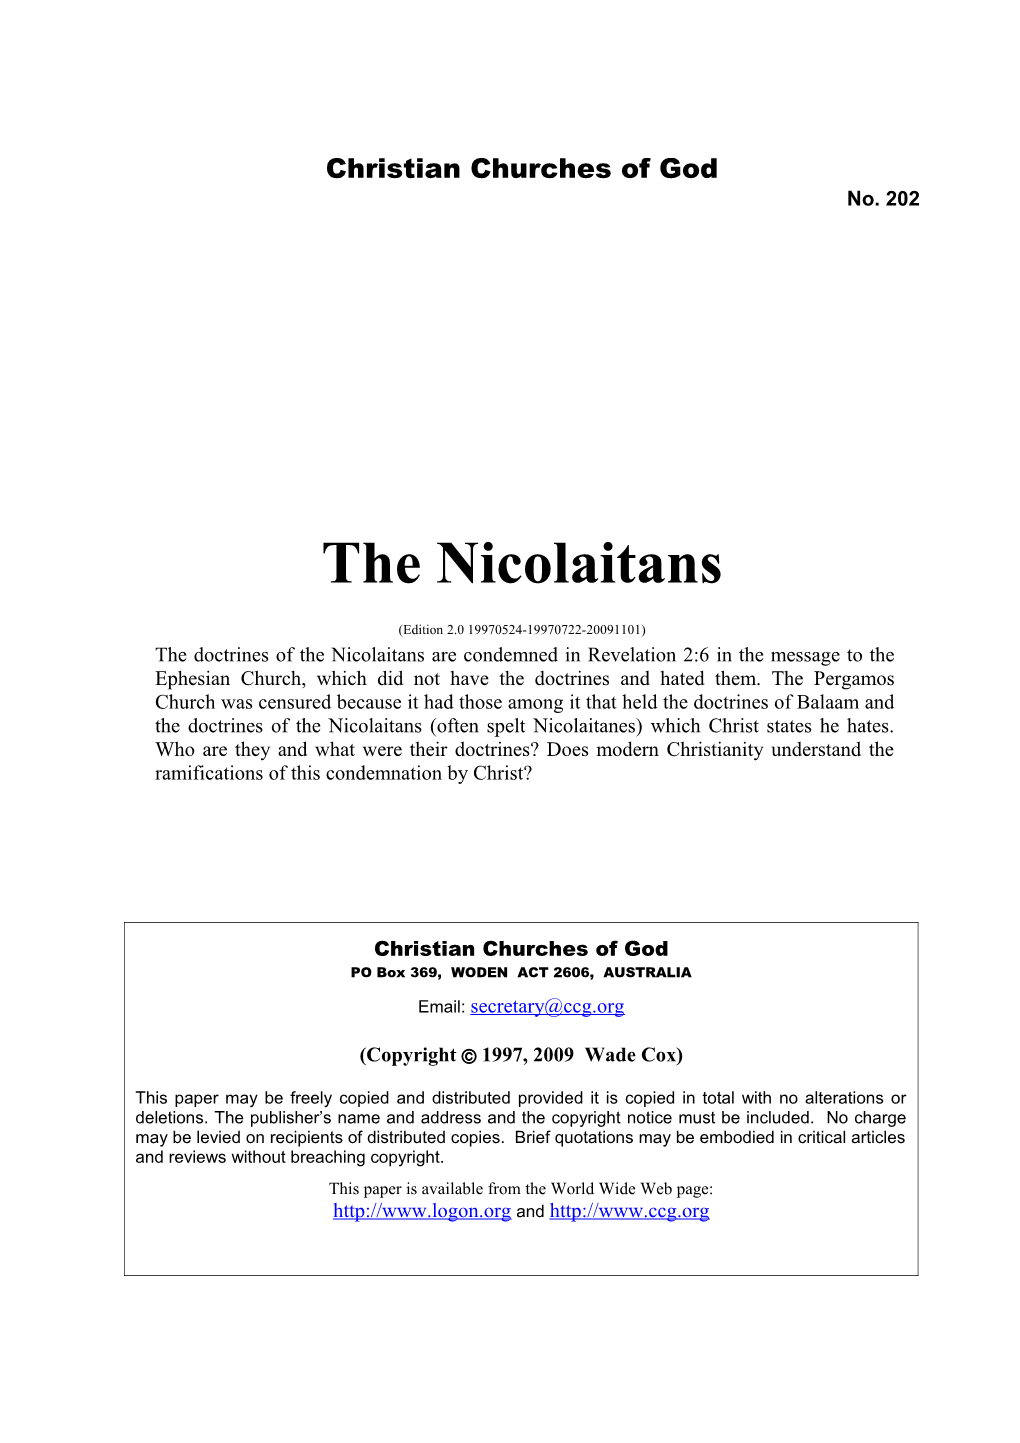 The Nicolaitans (No. 202)